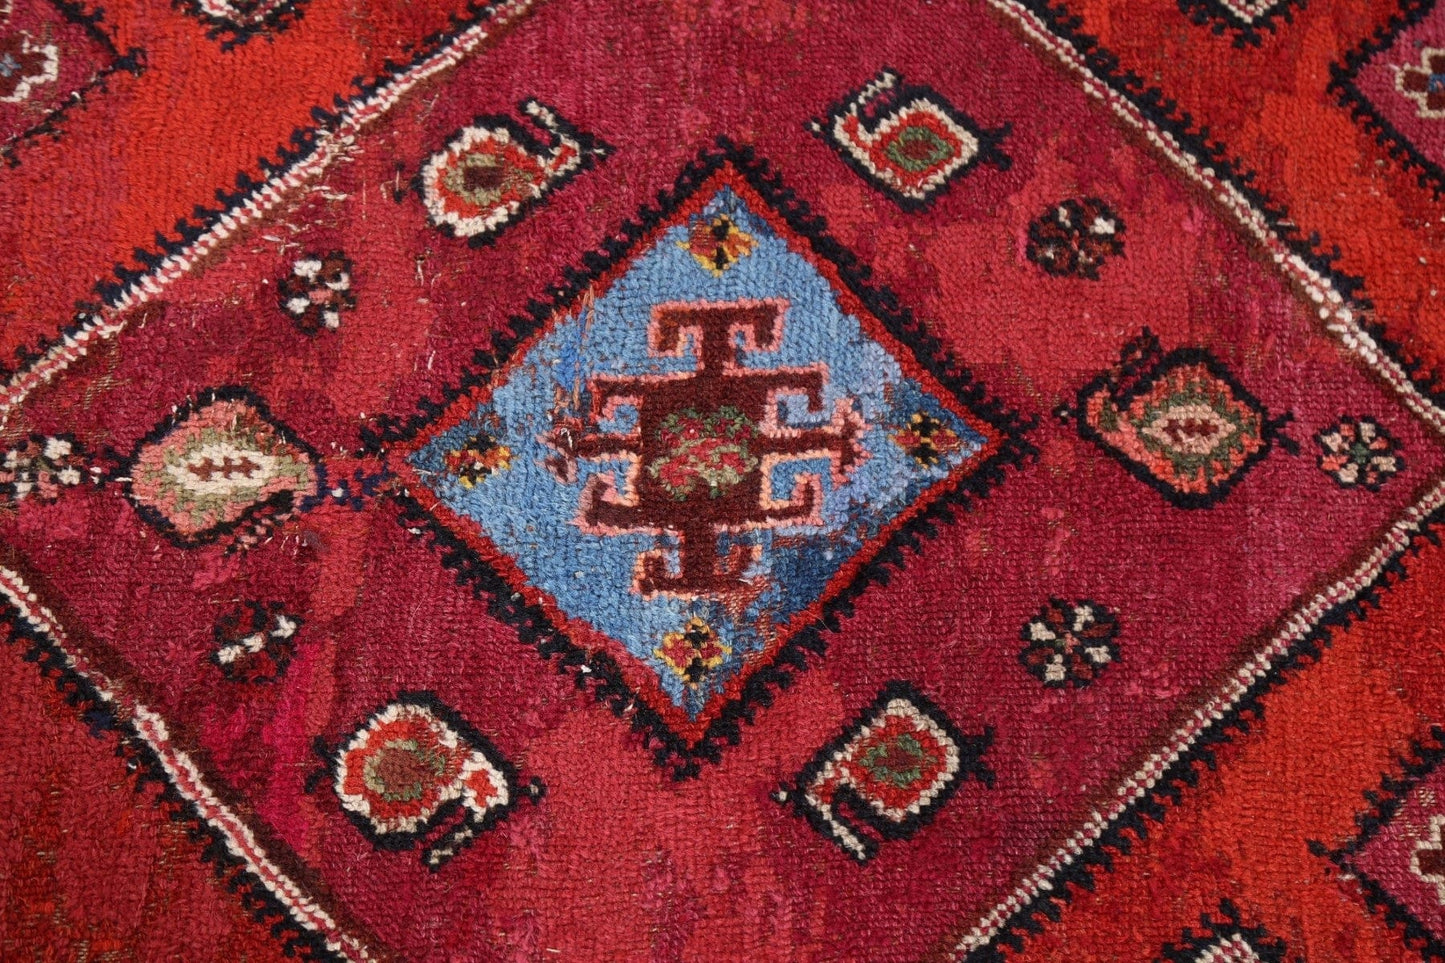 Pre-1900 Antique Vegetable Dye Afshar Persian Area Rug 4x6